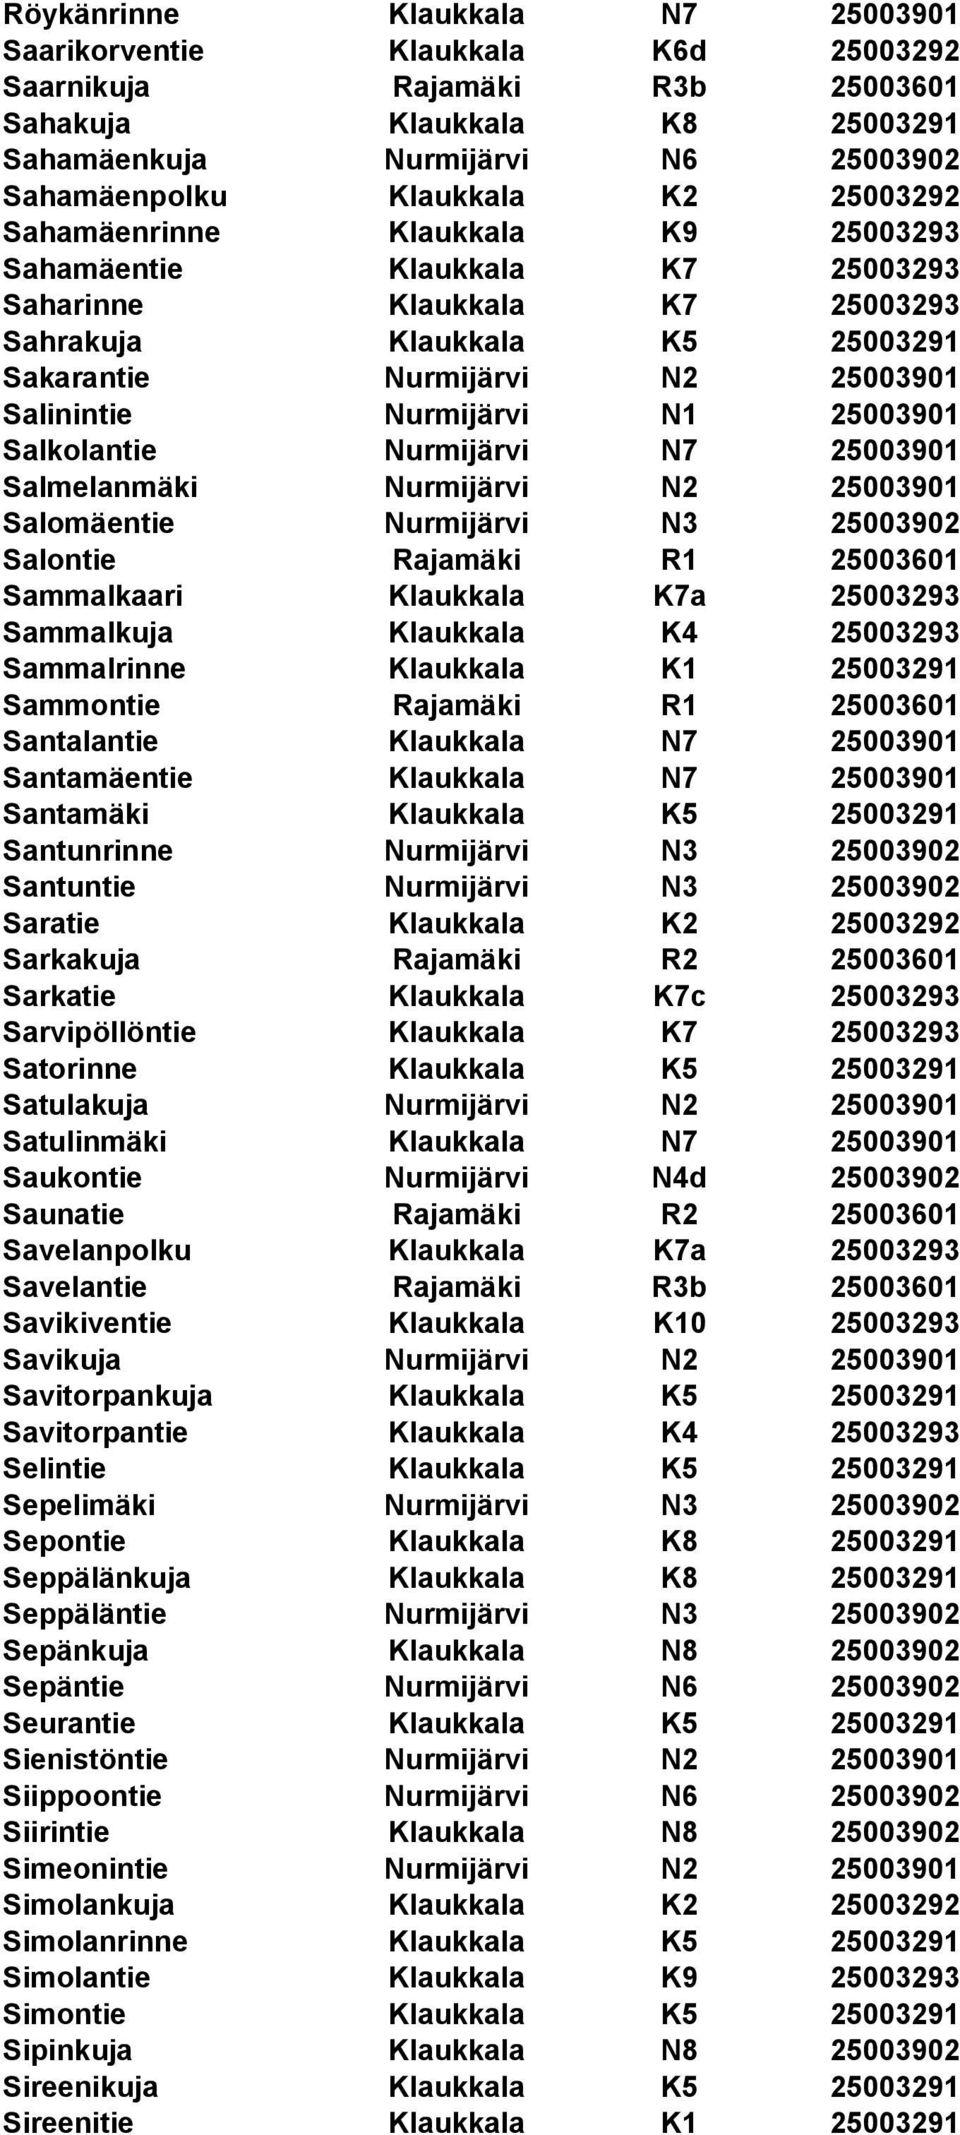 N1 25003901 Salkolantie Nurmijärvi N7 25003901 Salmelanmäki Nurmijärvi N2 25003901 Salomäentie Nurmijärvi N3 25003902 Salontie Rajamäki R1 25003601 Sammalkaari Klaukkala K7a 25003293 Sammalkuja